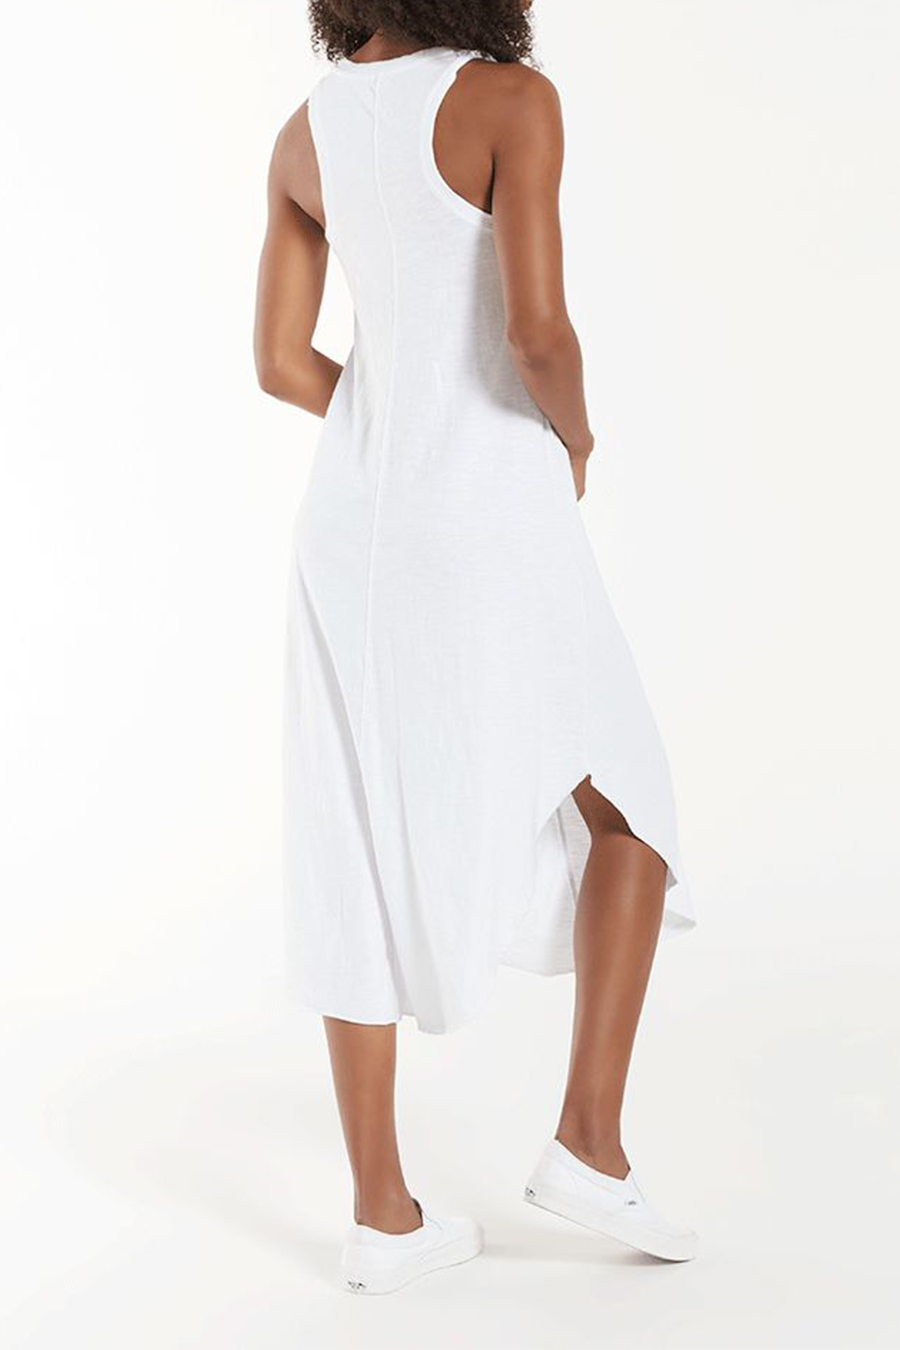 Reverie Dress | White - Main Image Number 2 of 2